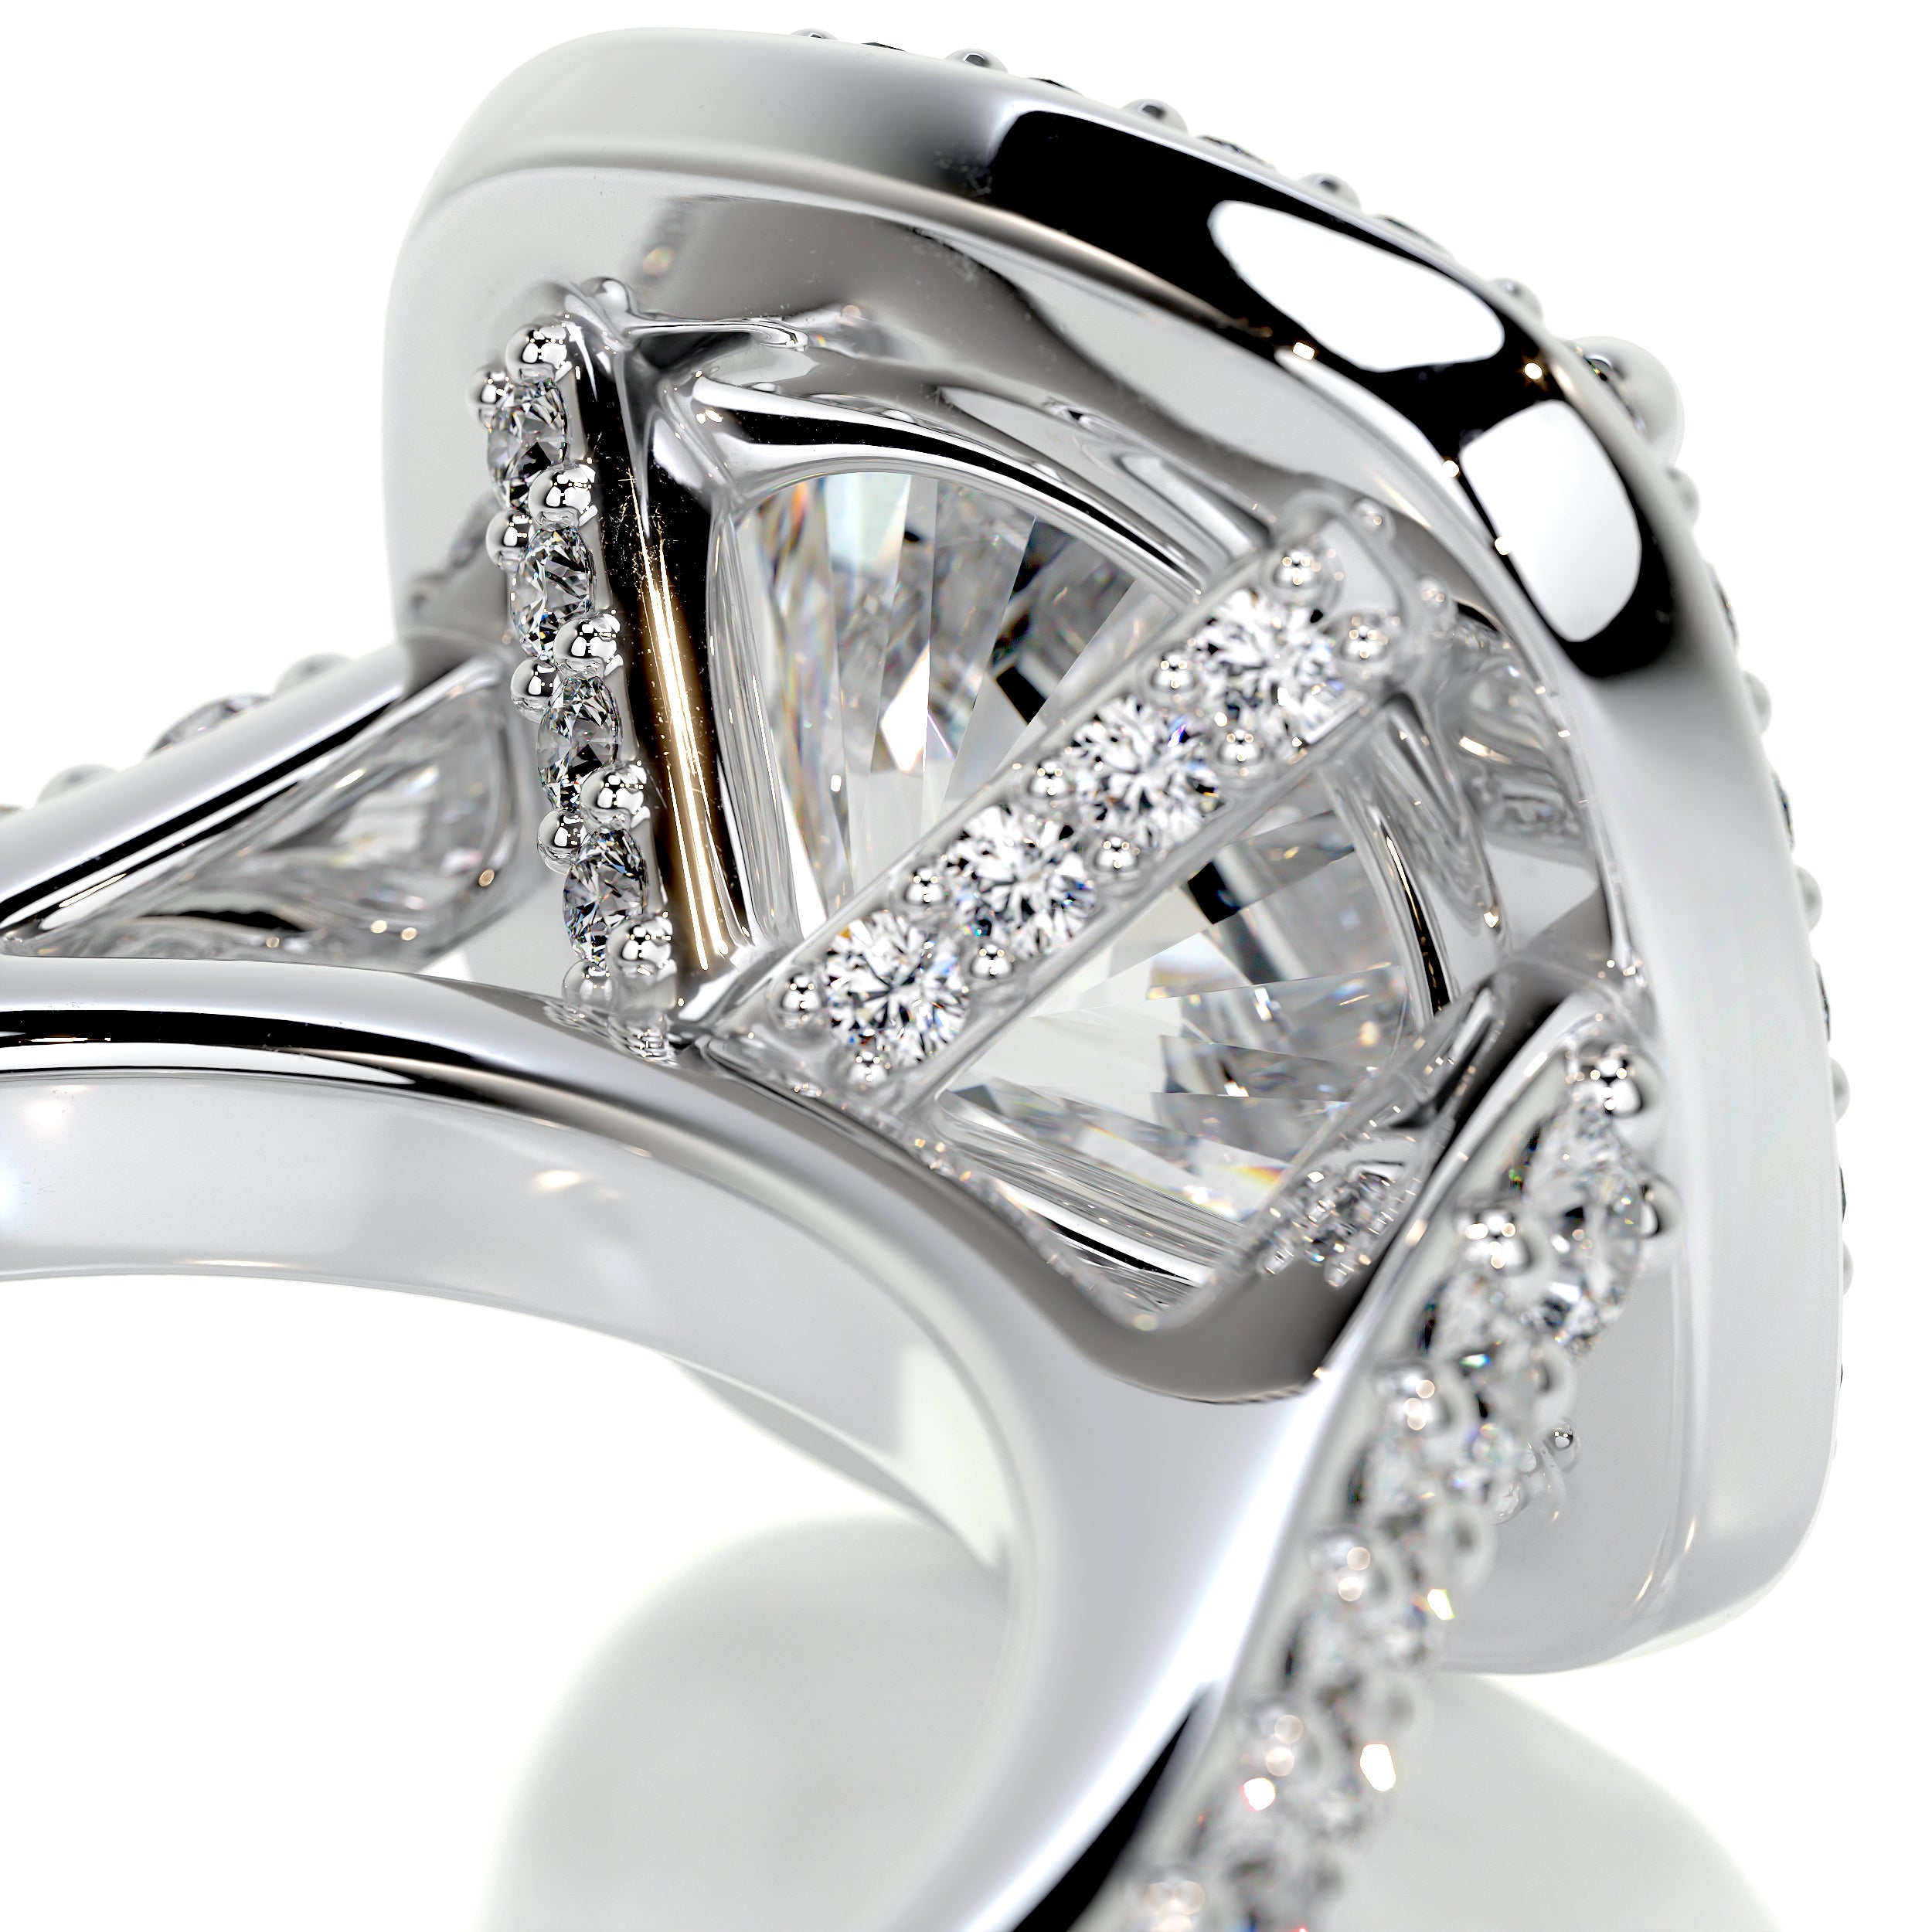 Selena Diamond Engagement Ring   (2.75 Carat) -18K White Gold